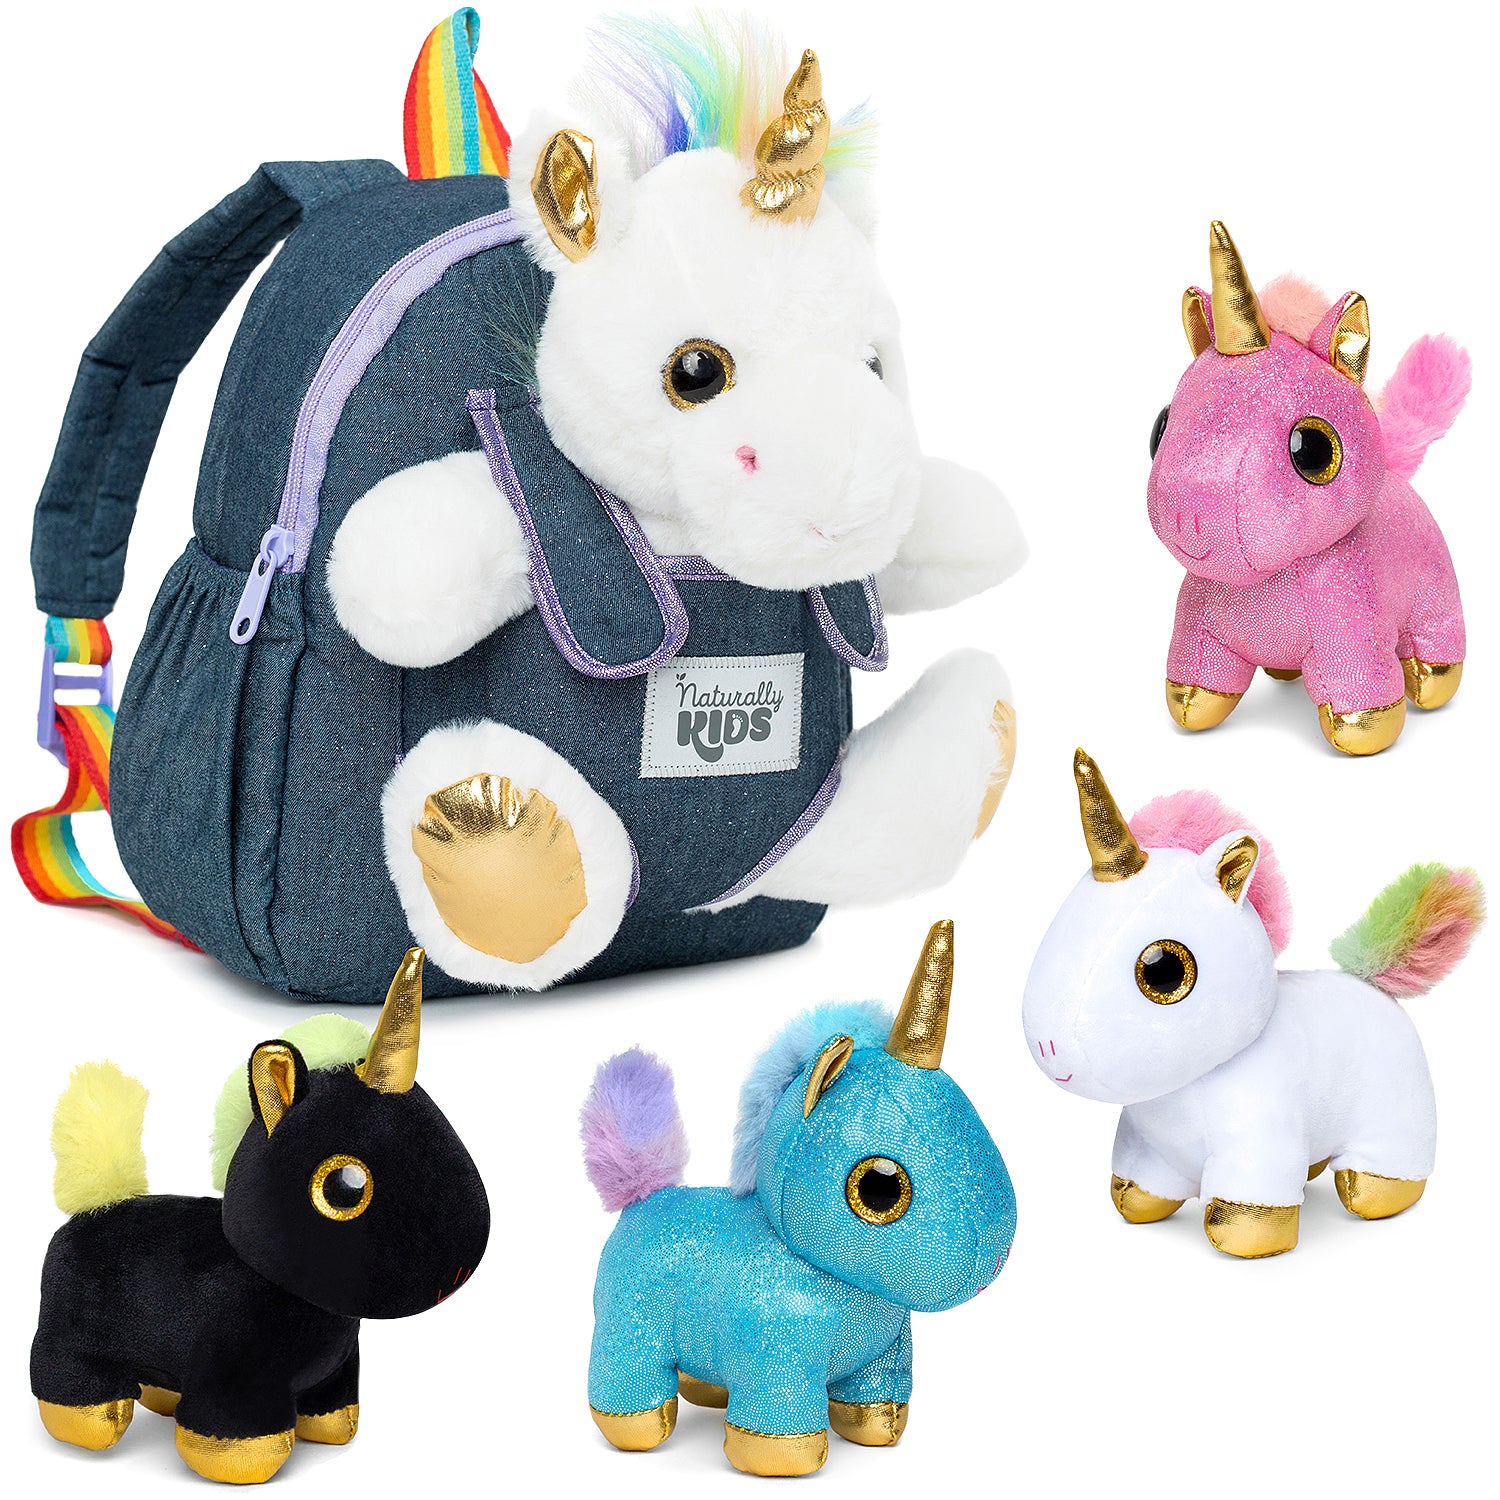 Unicorn Gifts for Girls Age 6-8, 4-6, Pillowcase Standard Size